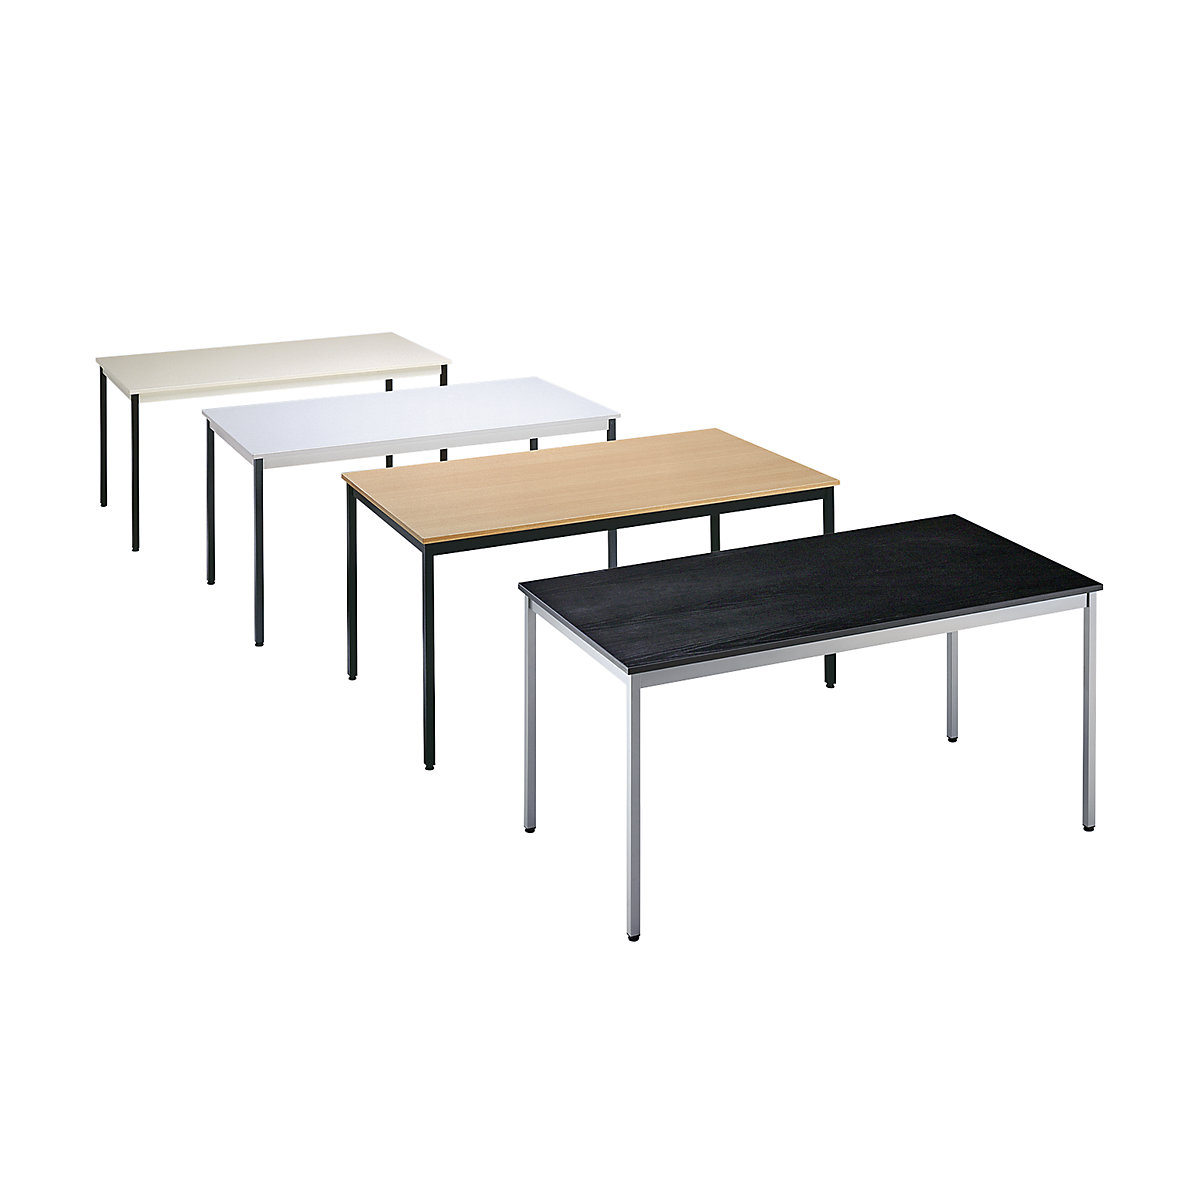 Universele tafel – eurokraft basic, rechthoekig, h x b x d = 740 x 700 x 600 mm, blad essenhoutdecor zwart, frame blank aluminiumkleurig-1